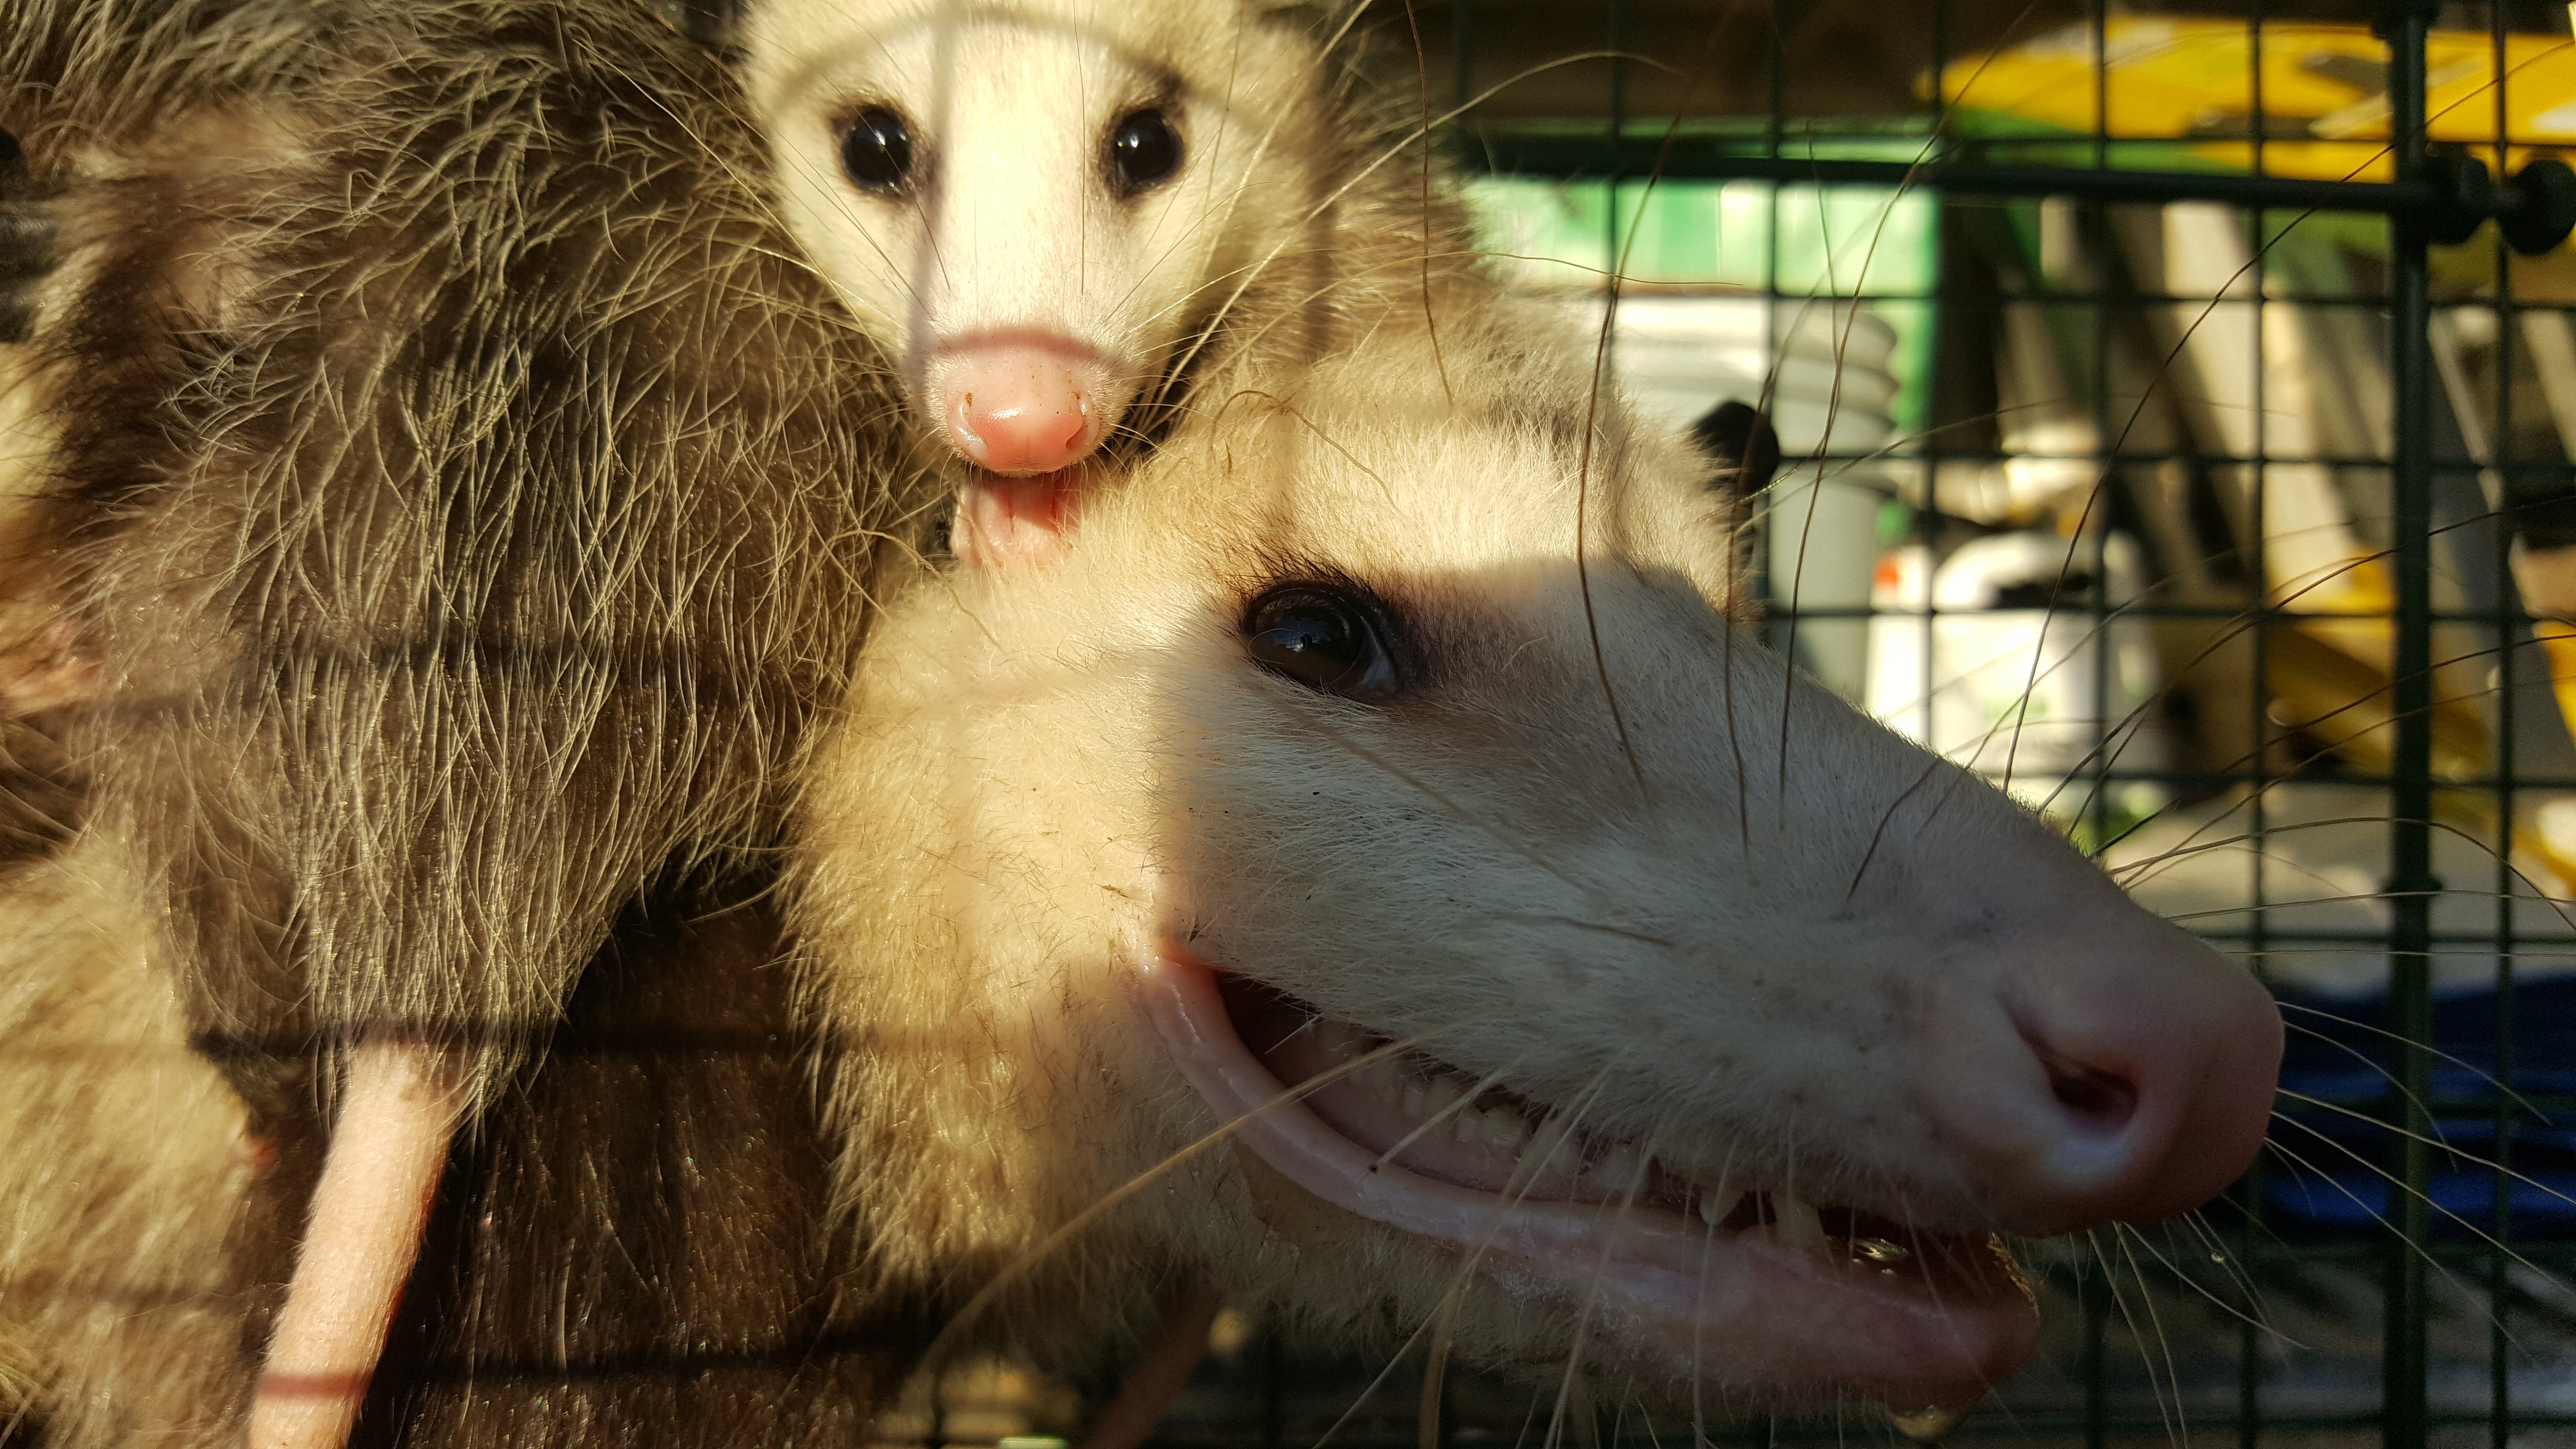 https://allstaranimaltrapping.com/wp-content/uploads/2019/02/opossumss.jpg